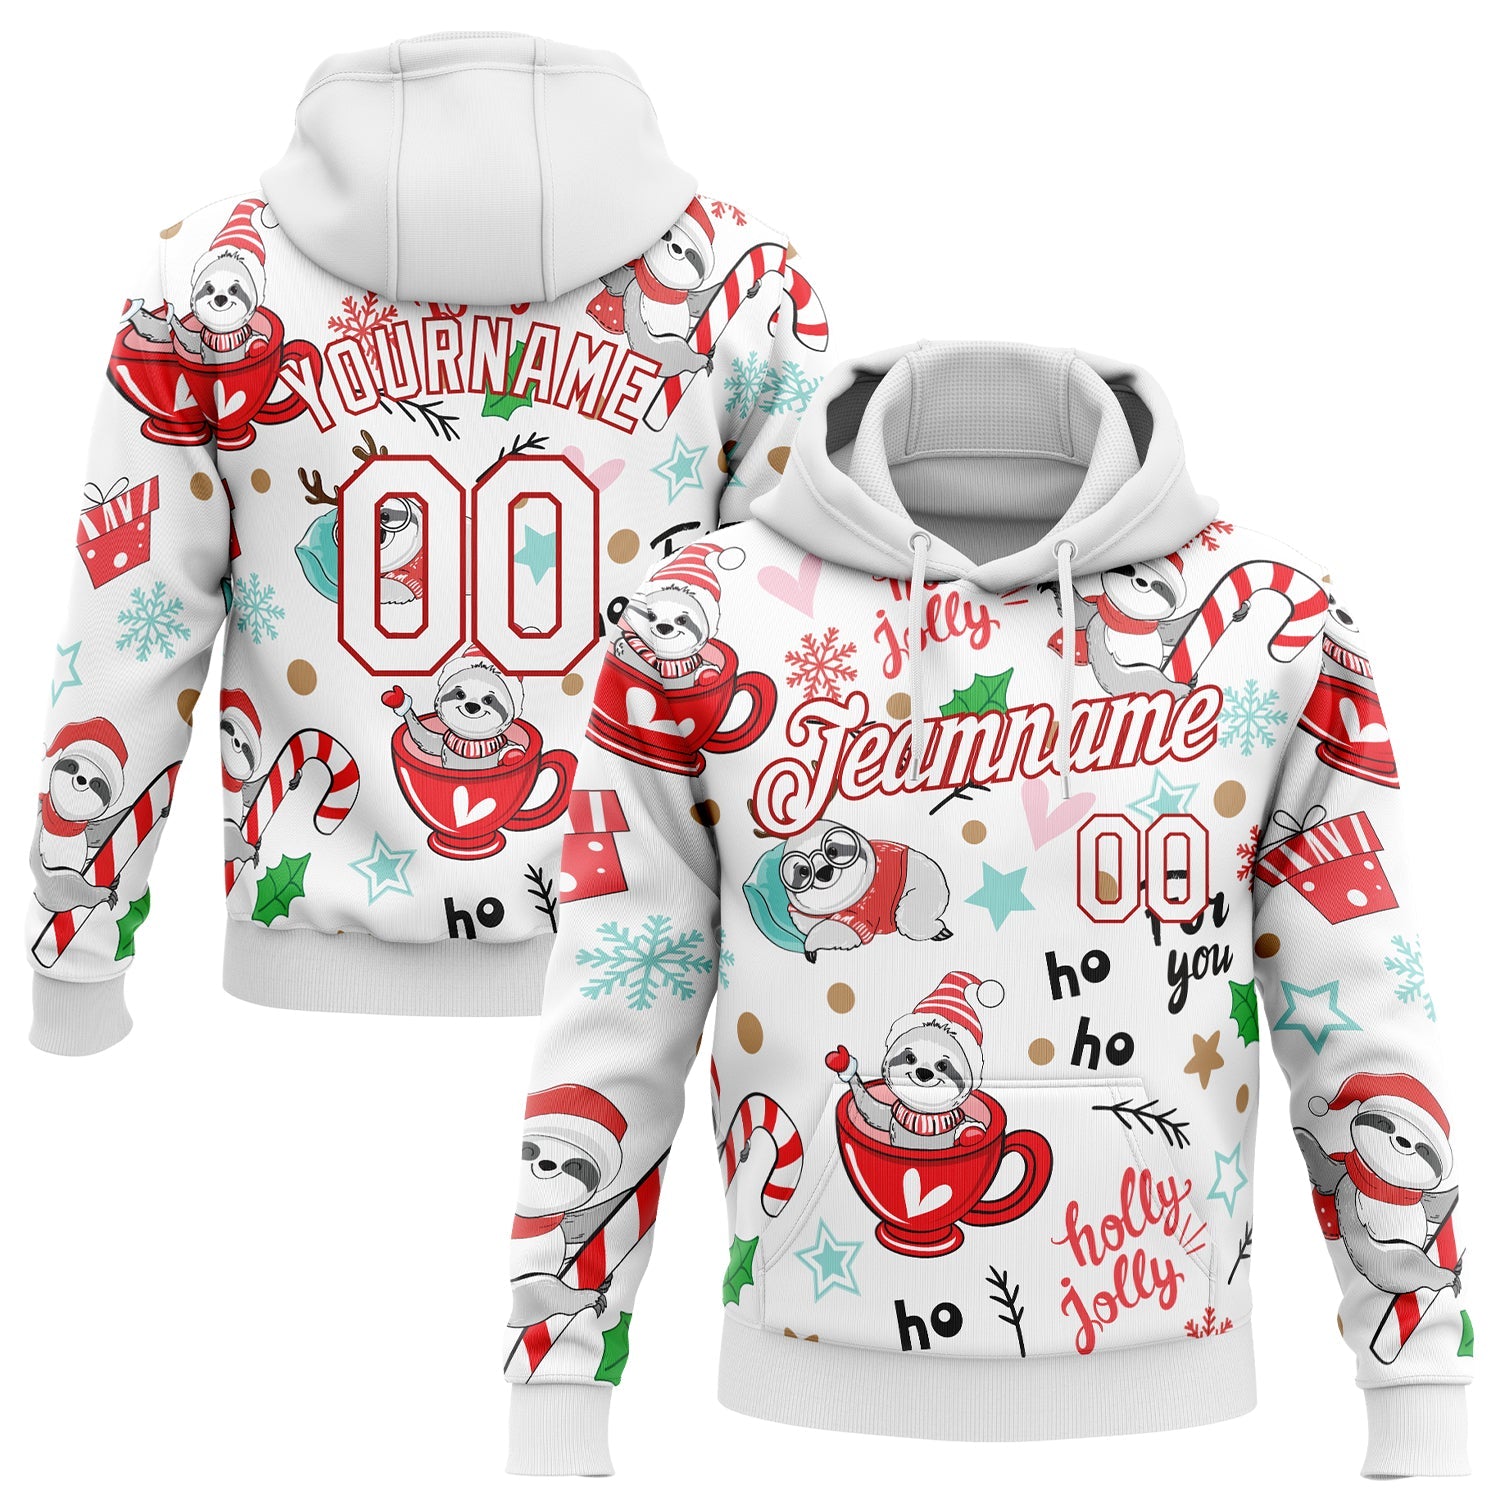 Individuell genähtes weißes weiß-rotes 3D-Weihnachts-Faultier-Sport-Pullover-Sweatshirt